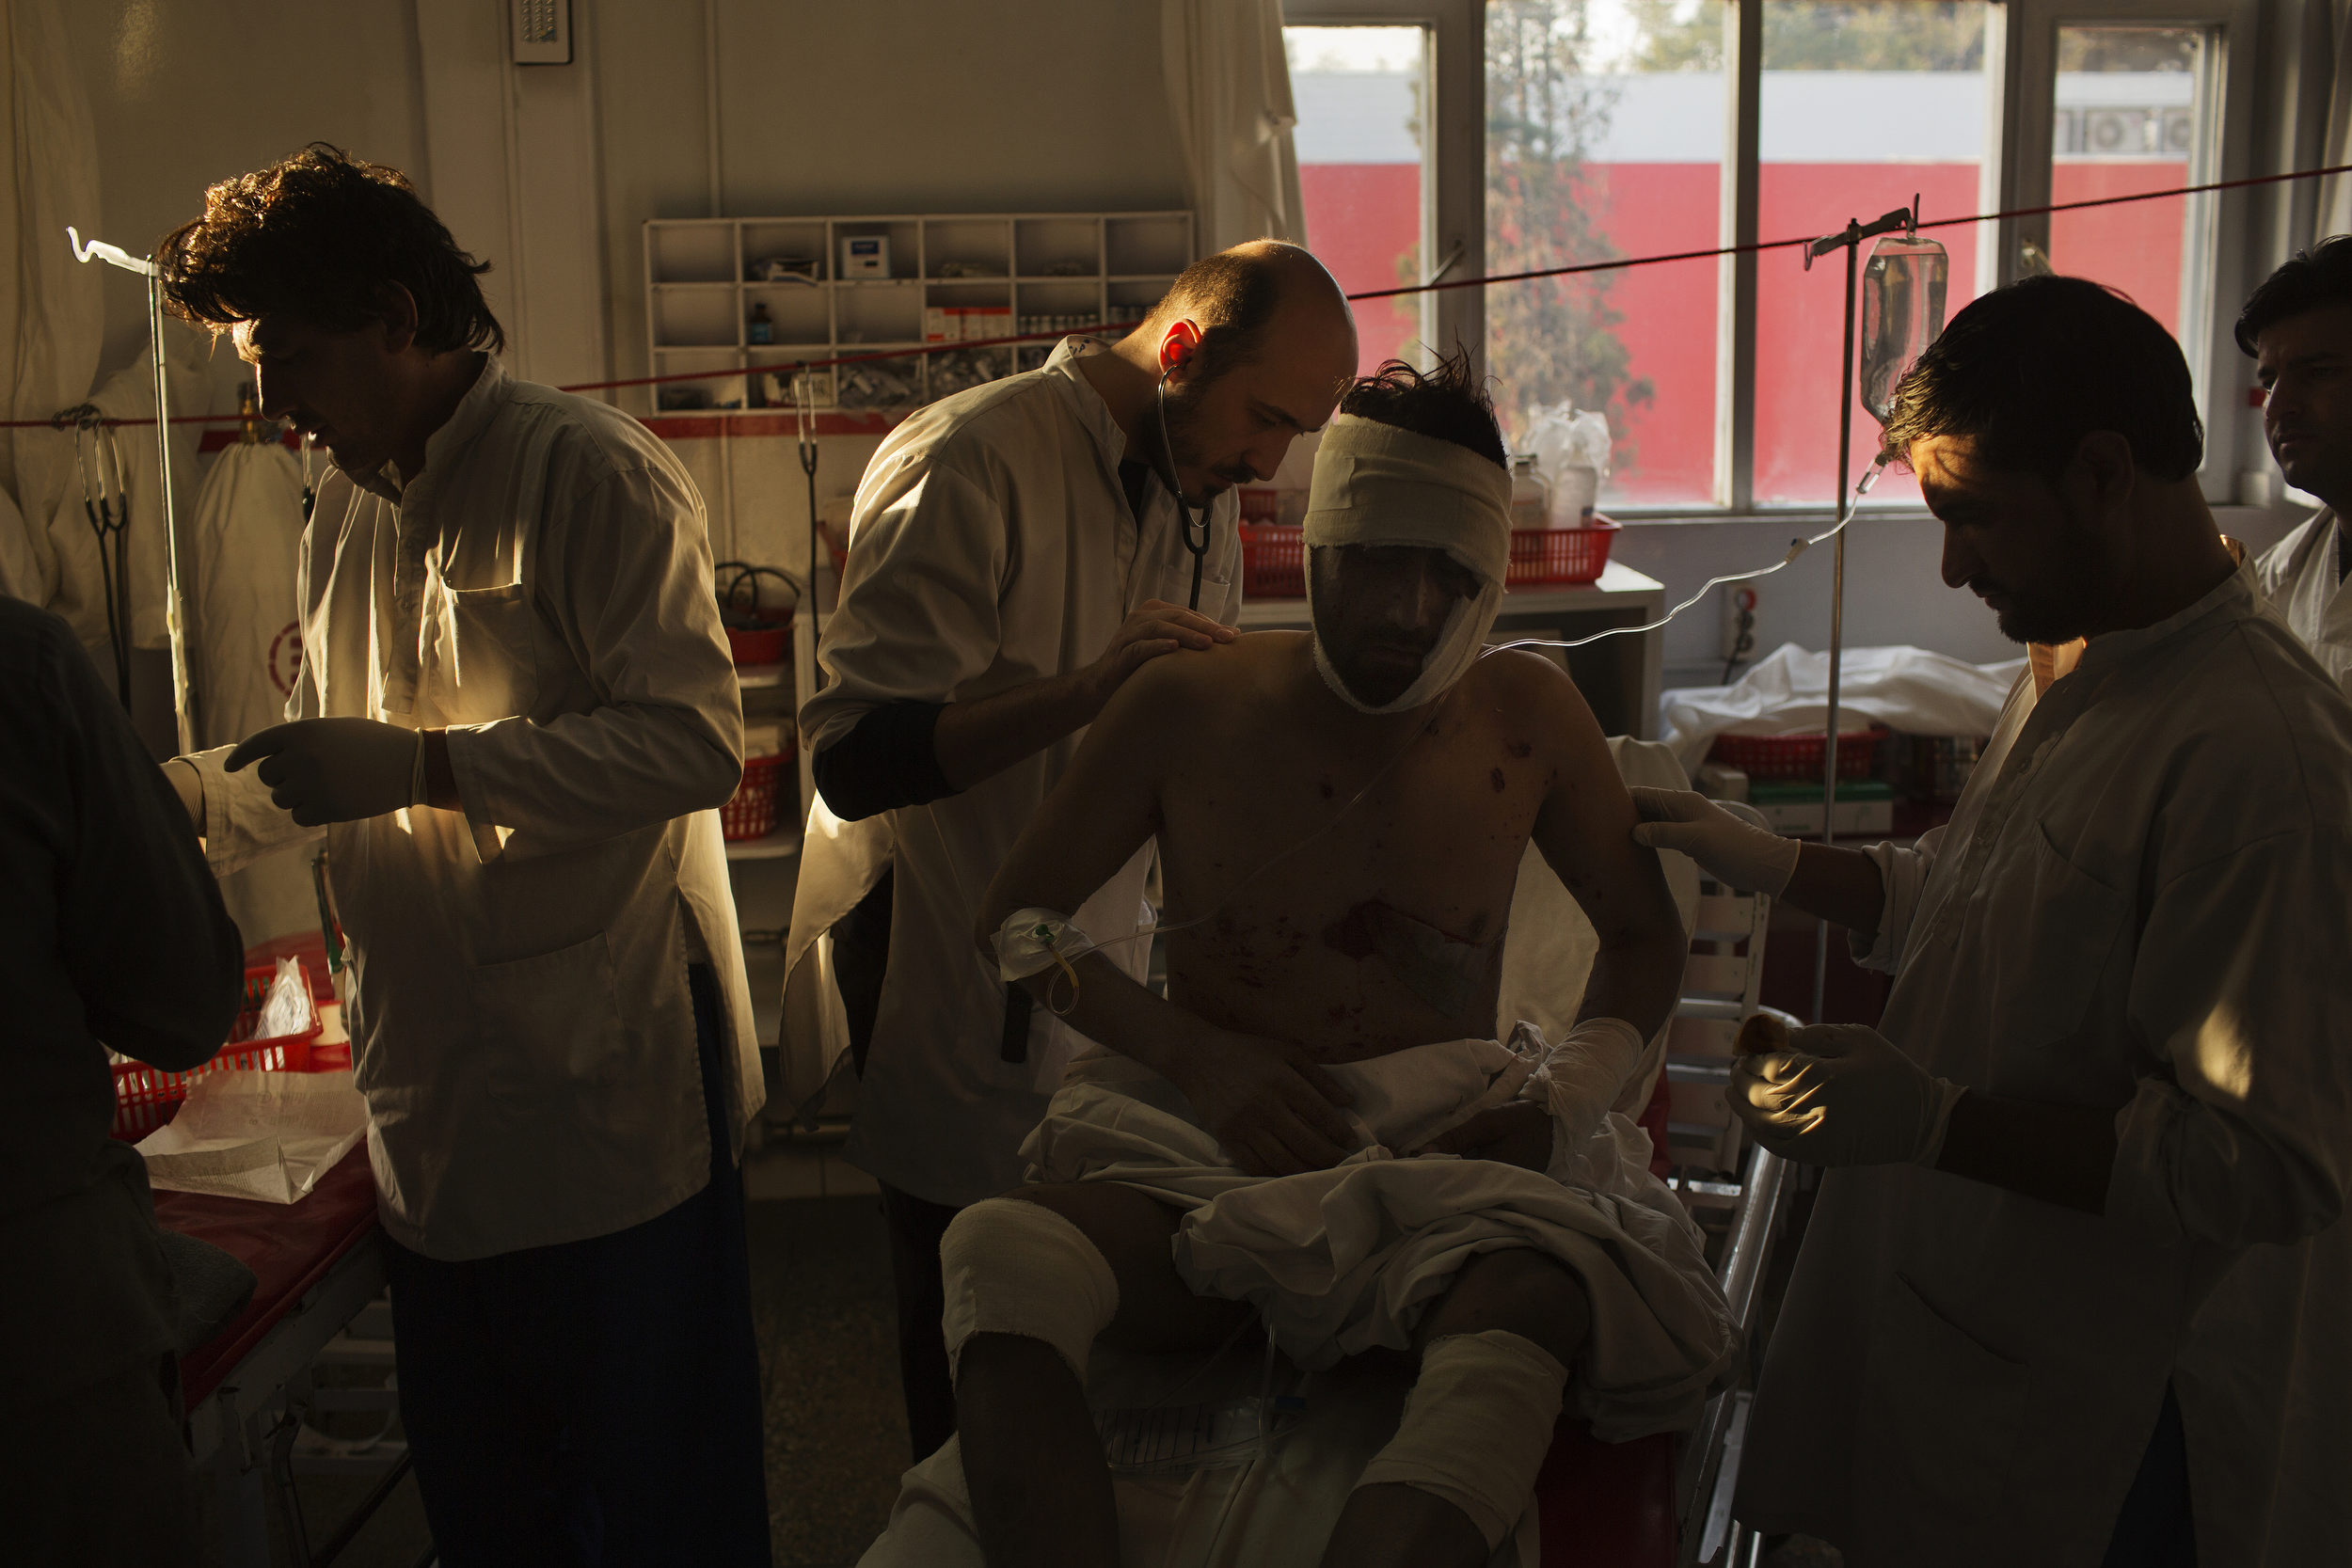  Surgeon Daniel Scerrati, center, examines Jamat Gul, 28, who suffered shrapnel injuries in an IED blast 